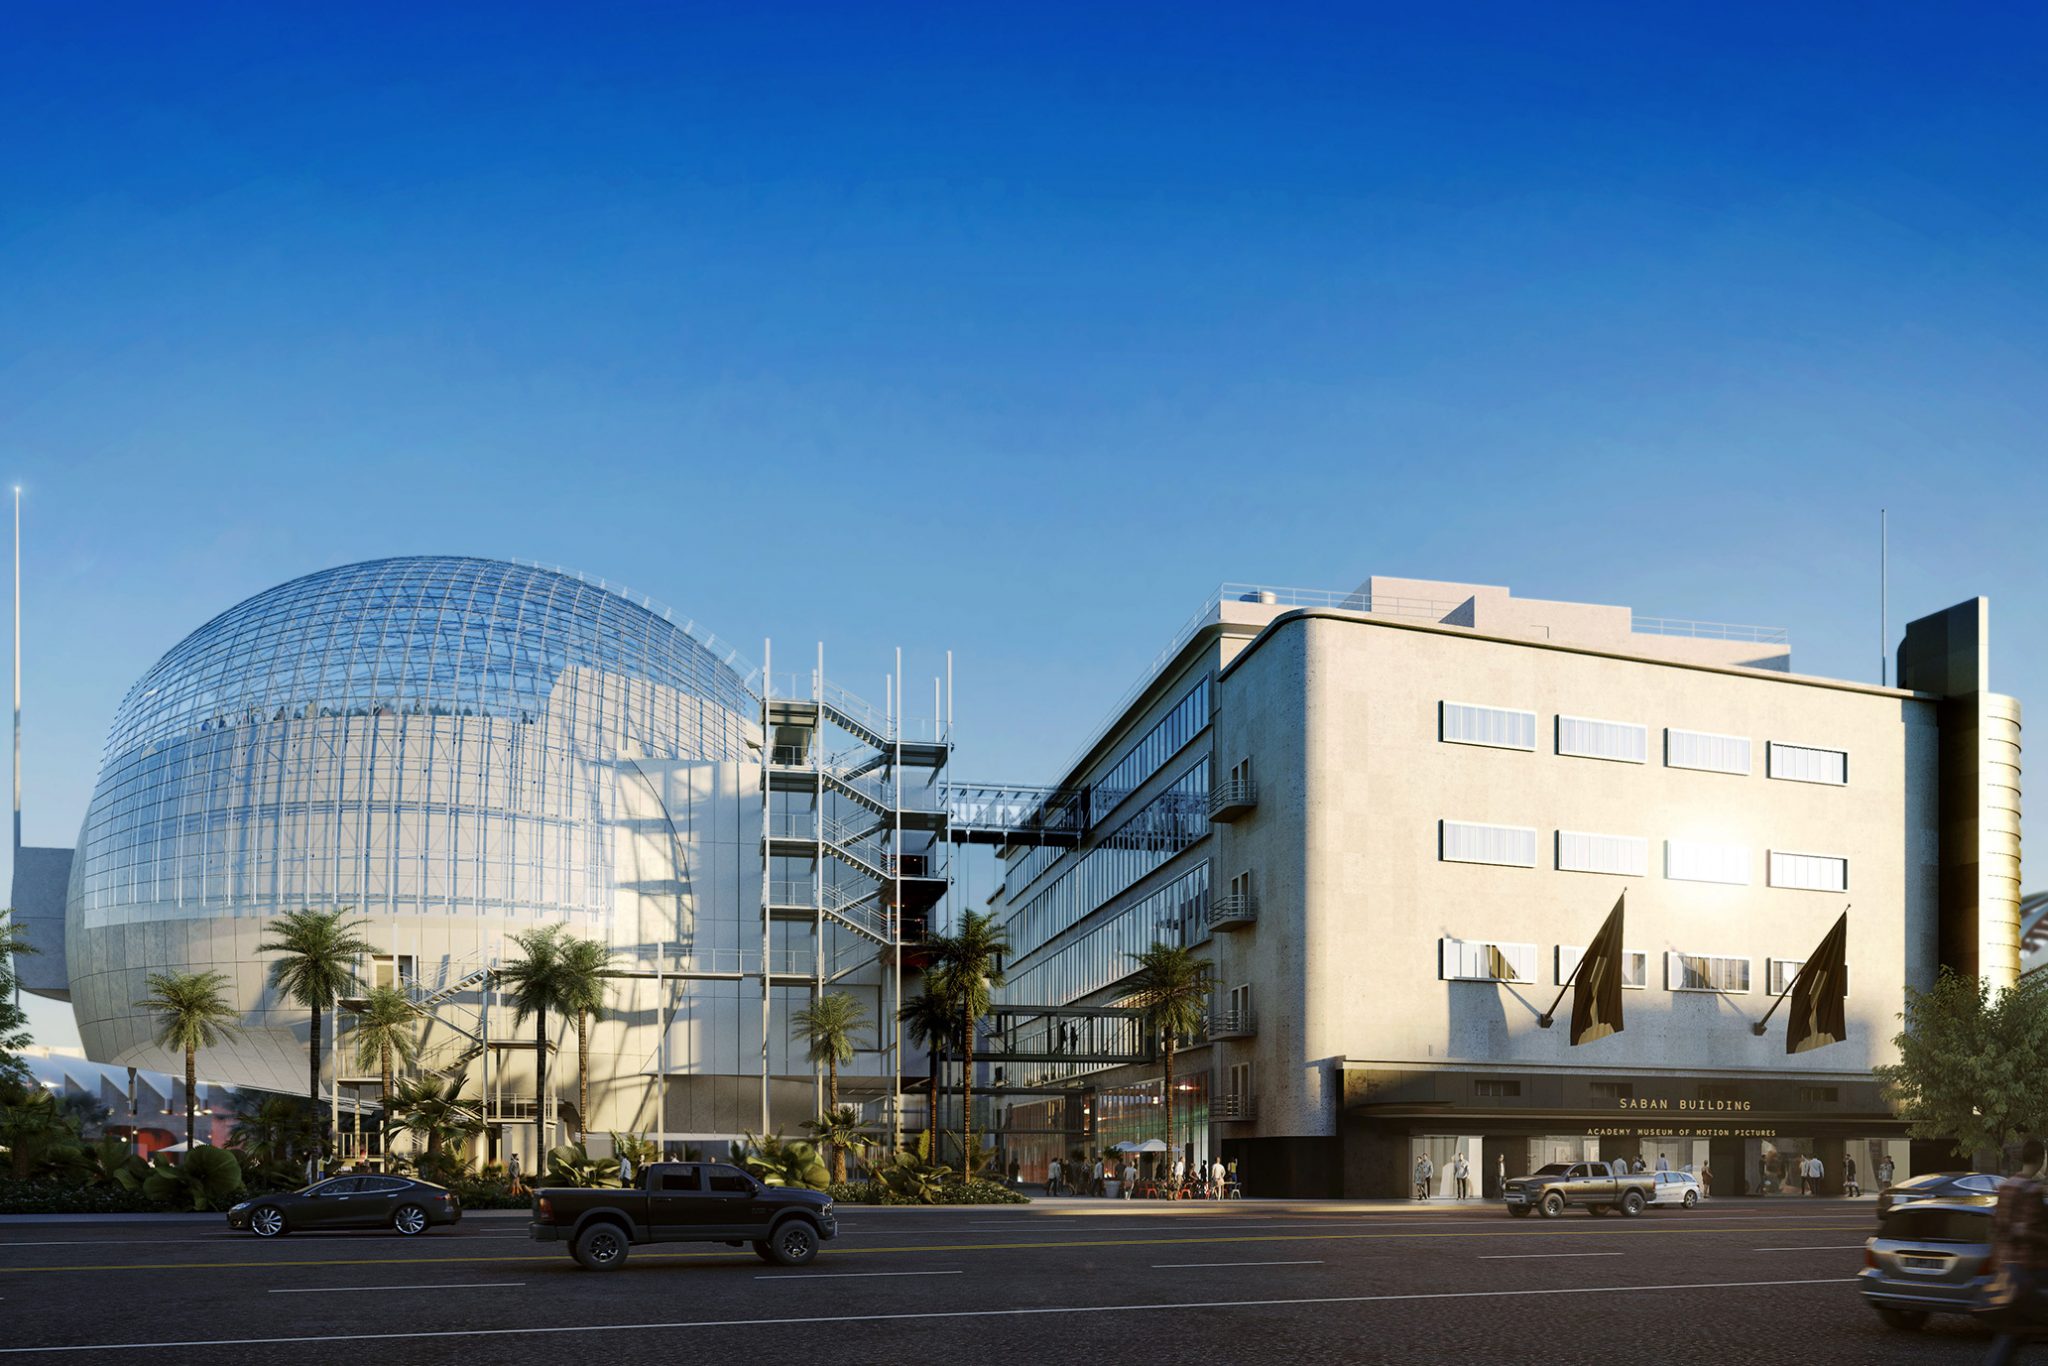 The Academy Museum rises | Design & Architecture